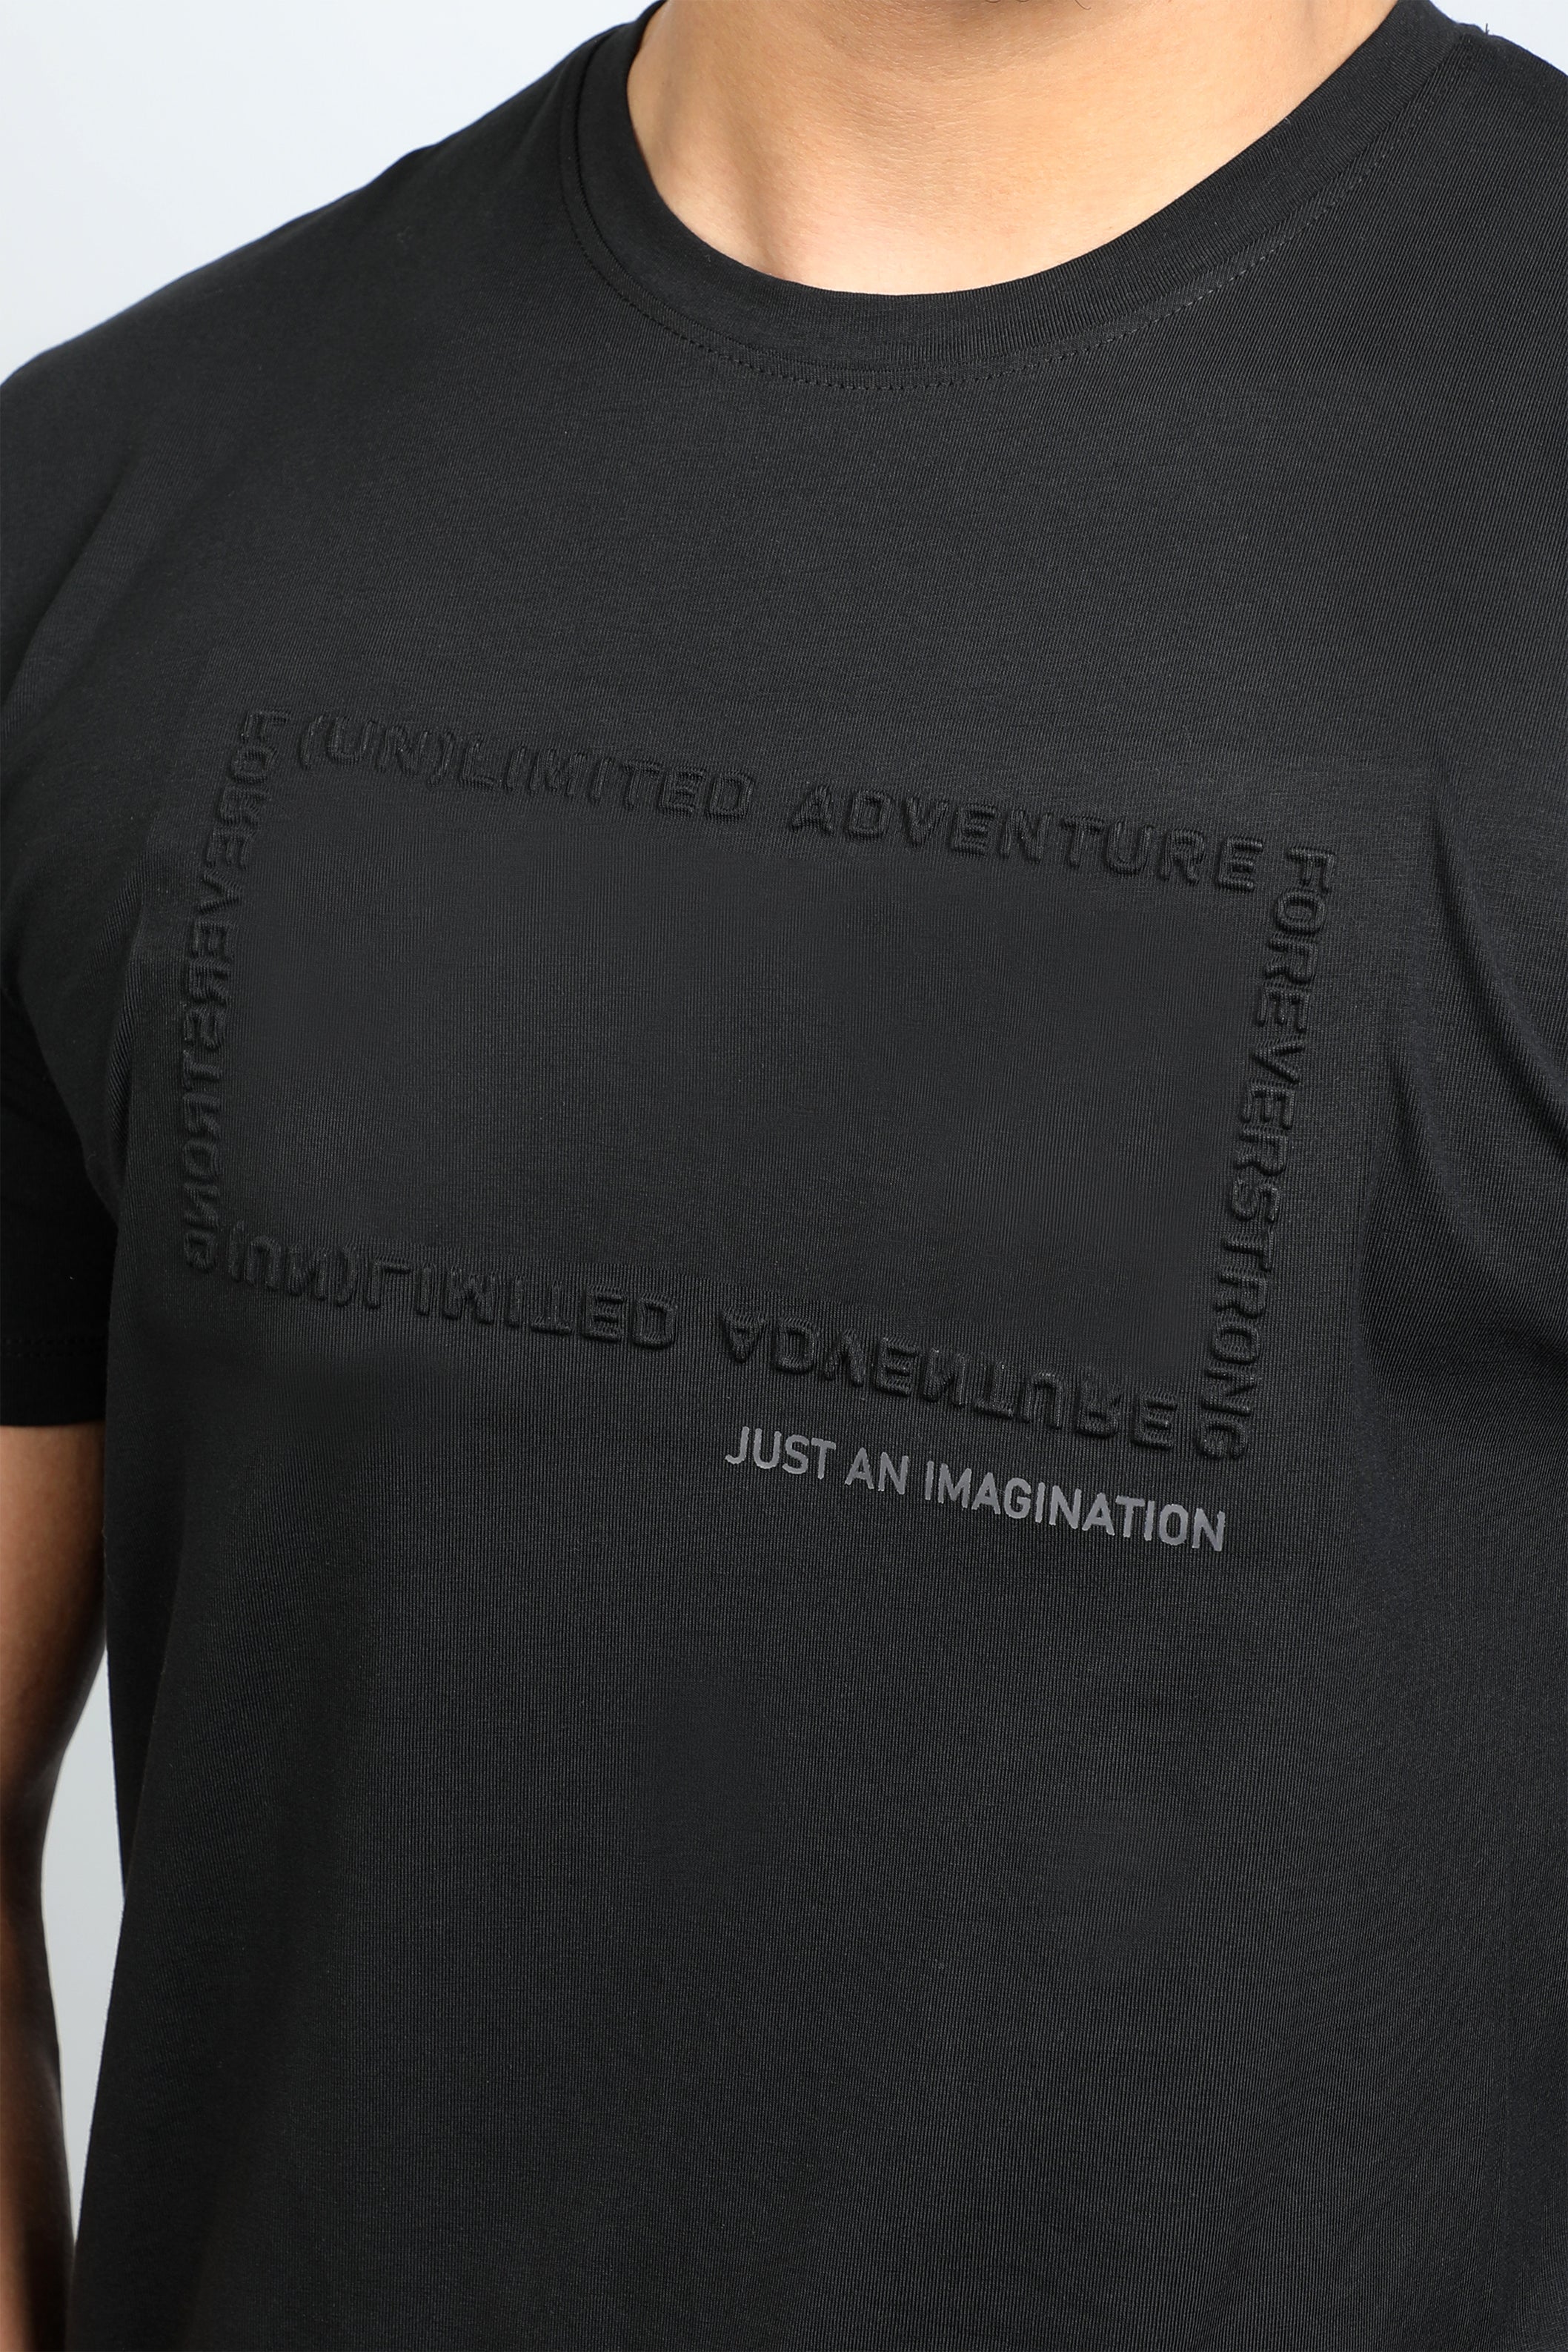 T-shirt Black ' Just An Imagination' Front Design